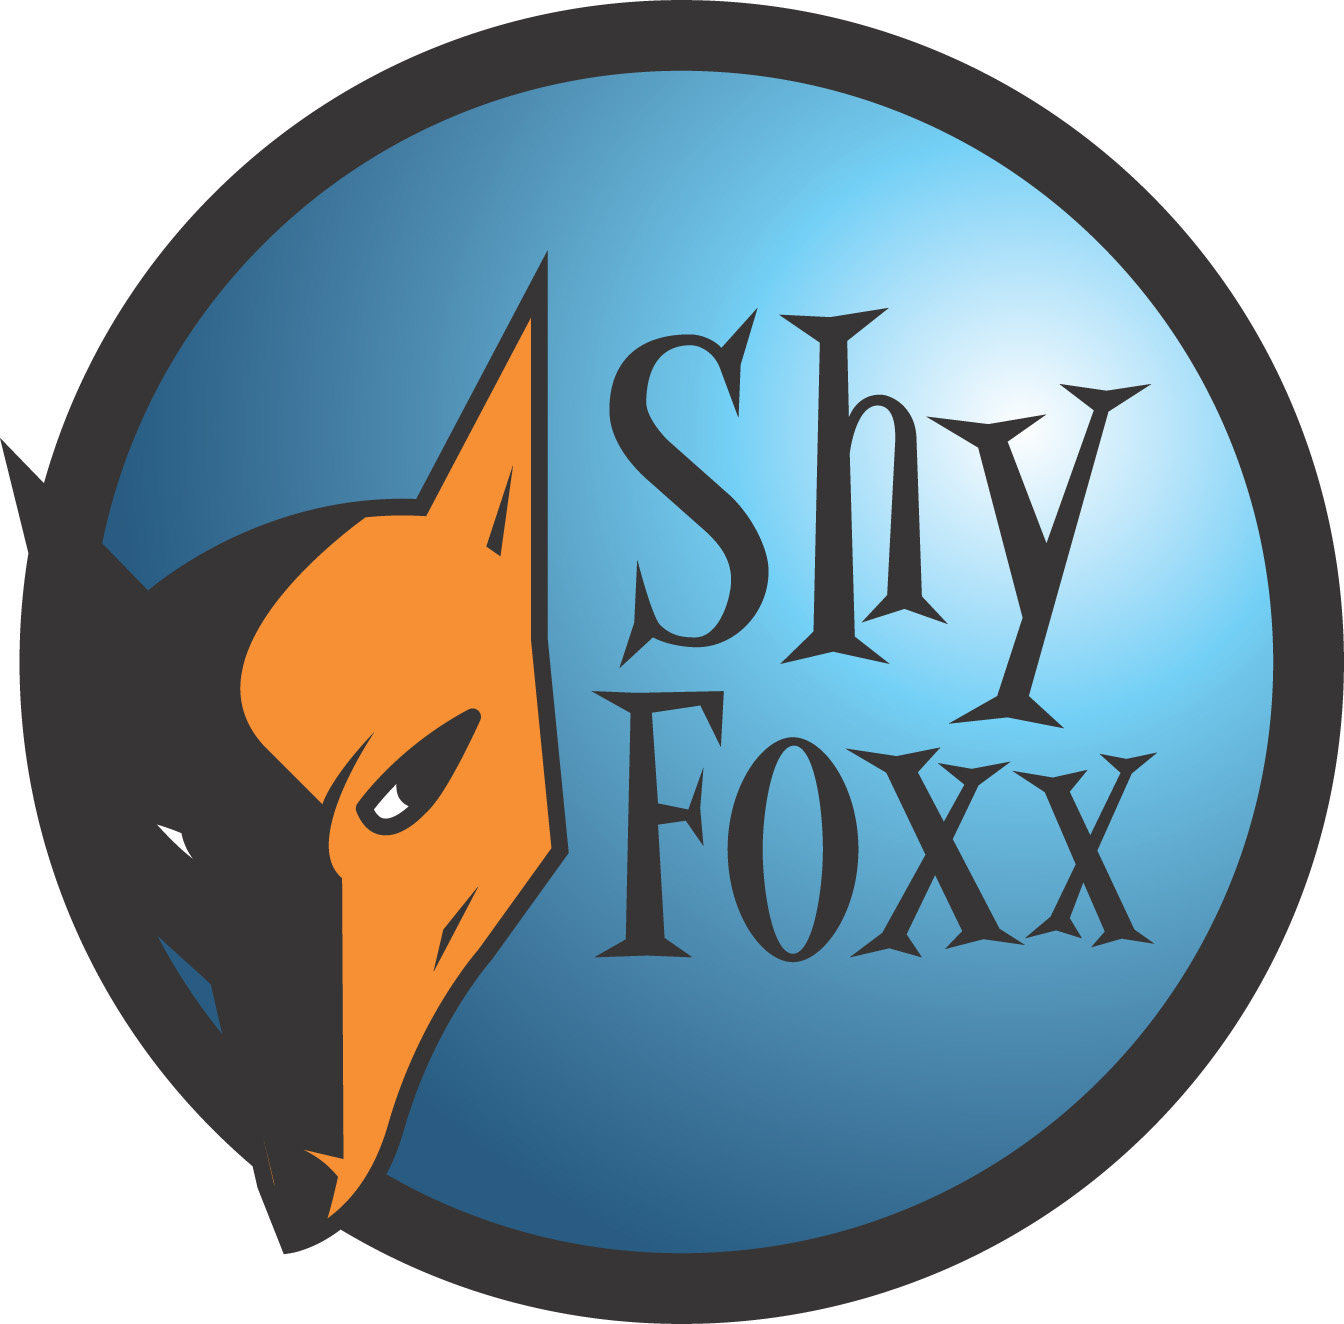 Shy Foxx Logo